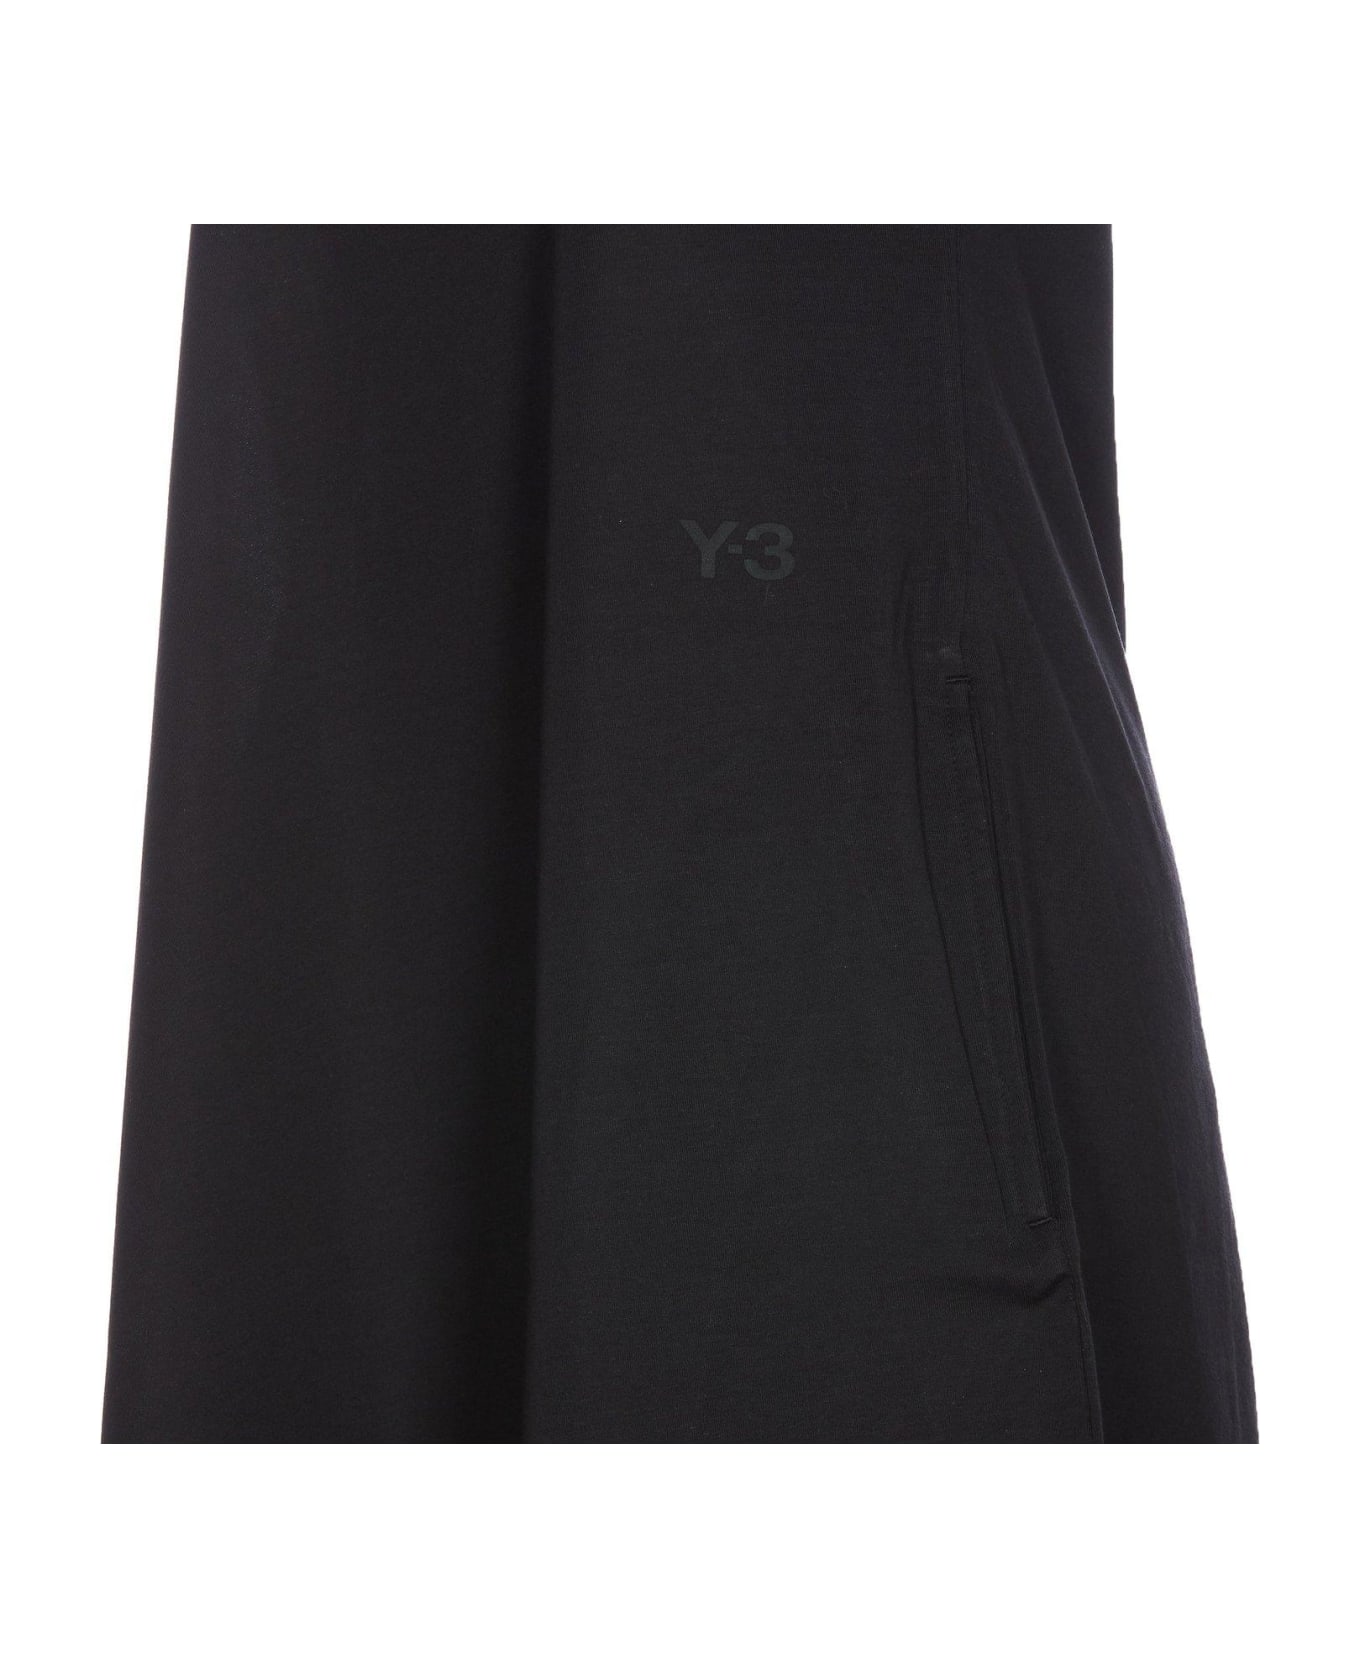 Y-3 Sleeveless Draped Asymmetric Dress - BLACK ワンピース＆ドレス